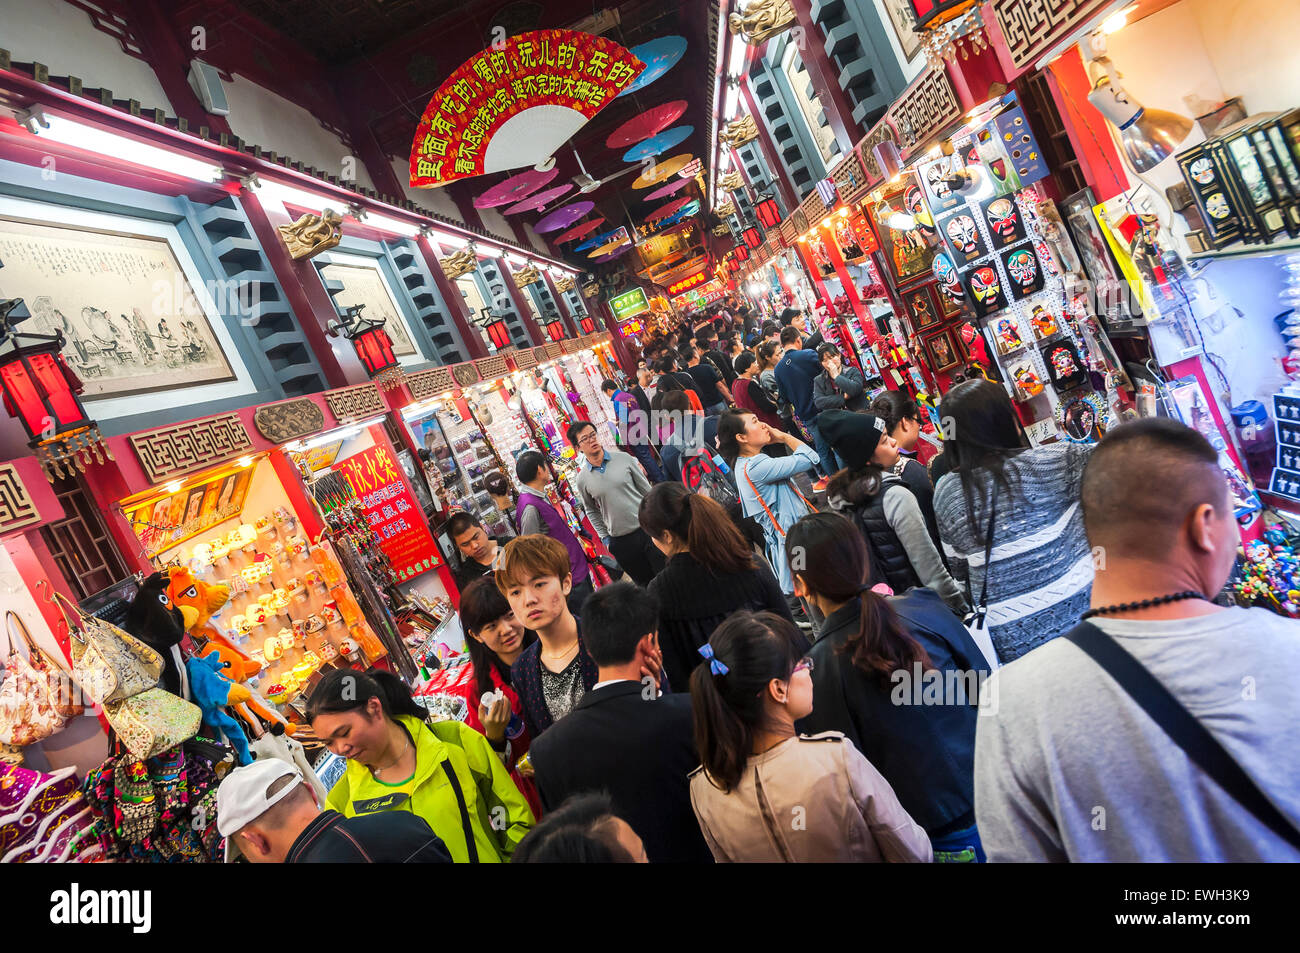 BEIJING, CHINA - OCT 2015 - A busy night market on Dashilan Commercial Street, Beijing, China Stock Photo